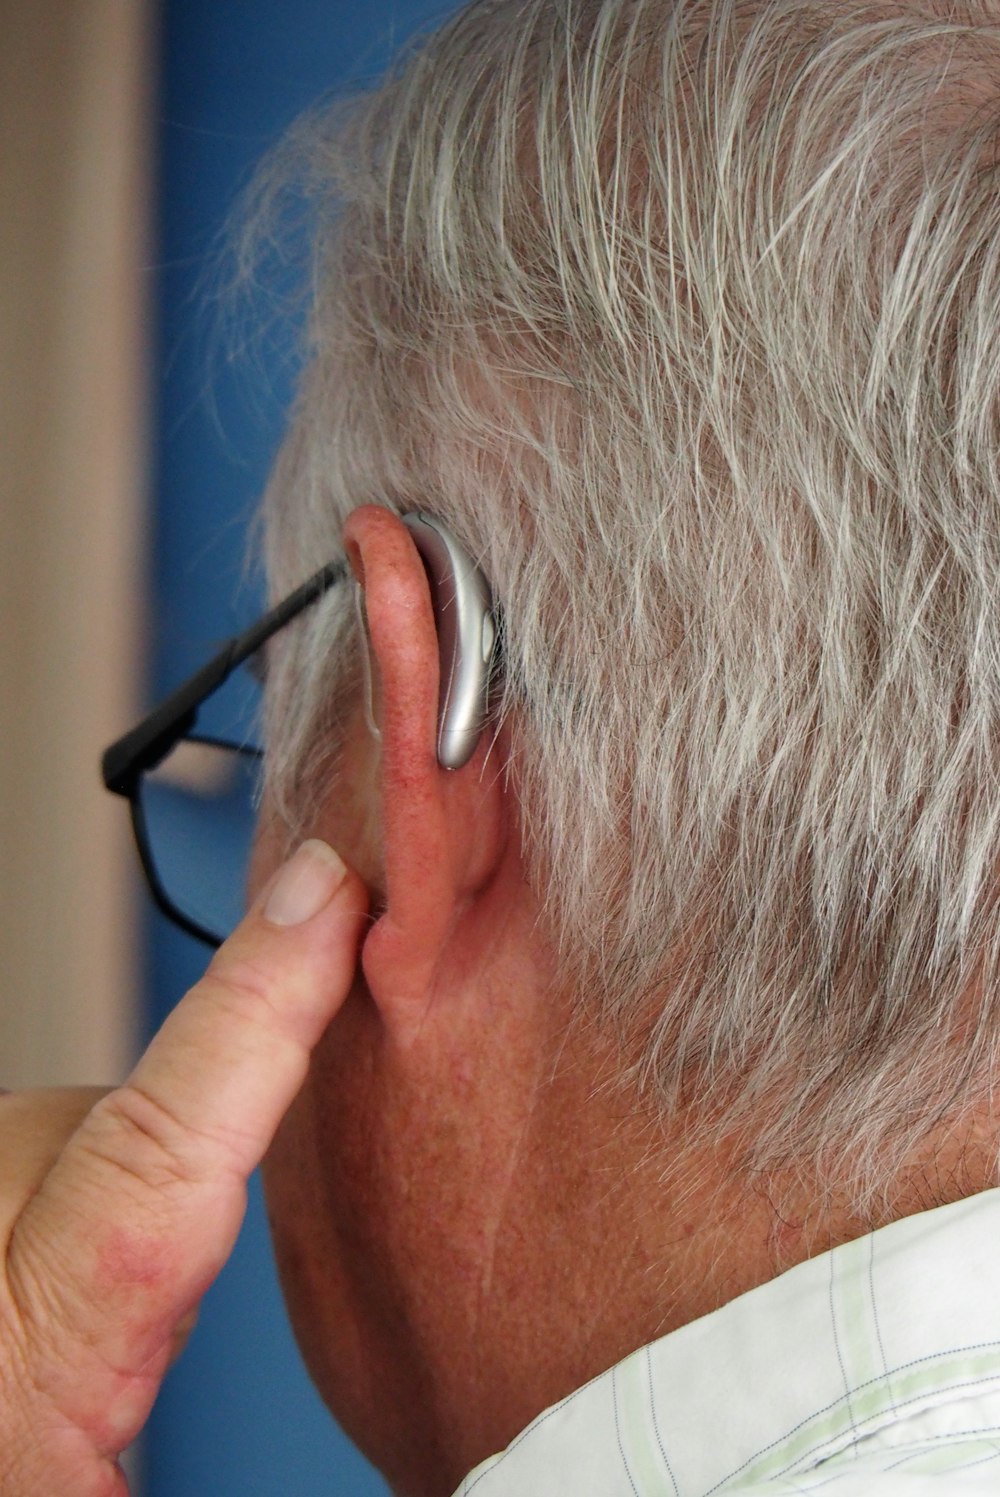 an older man wearing a pair of ear buds